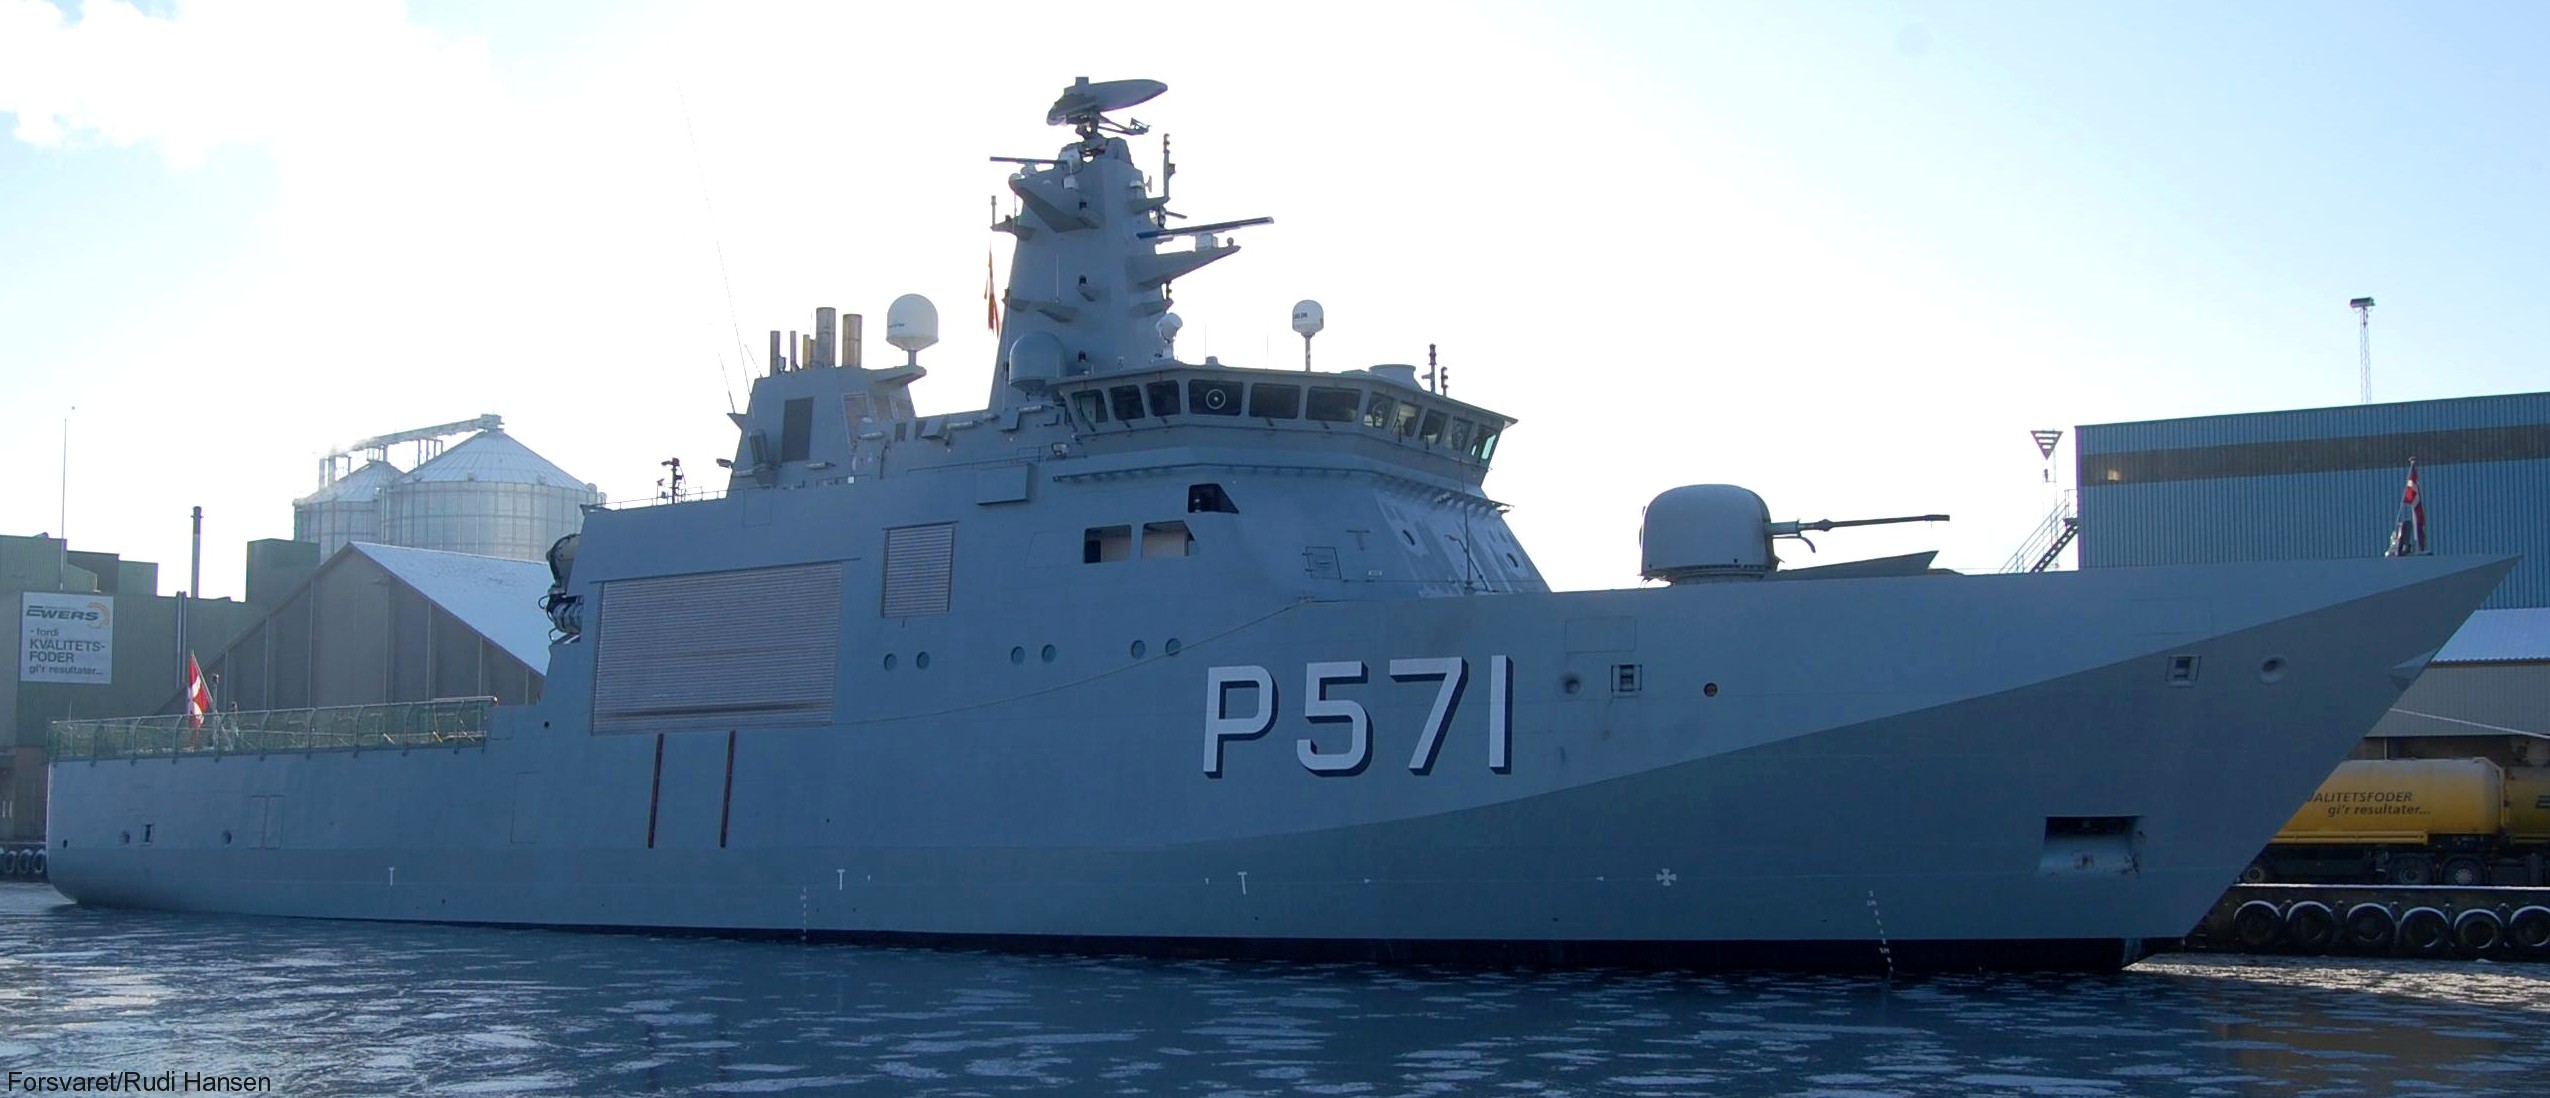 p-571 hdms ejnar mikkelsen knud rasmussen class offshore patrol vessel opv royal danish navy inspektionsfartøj 21